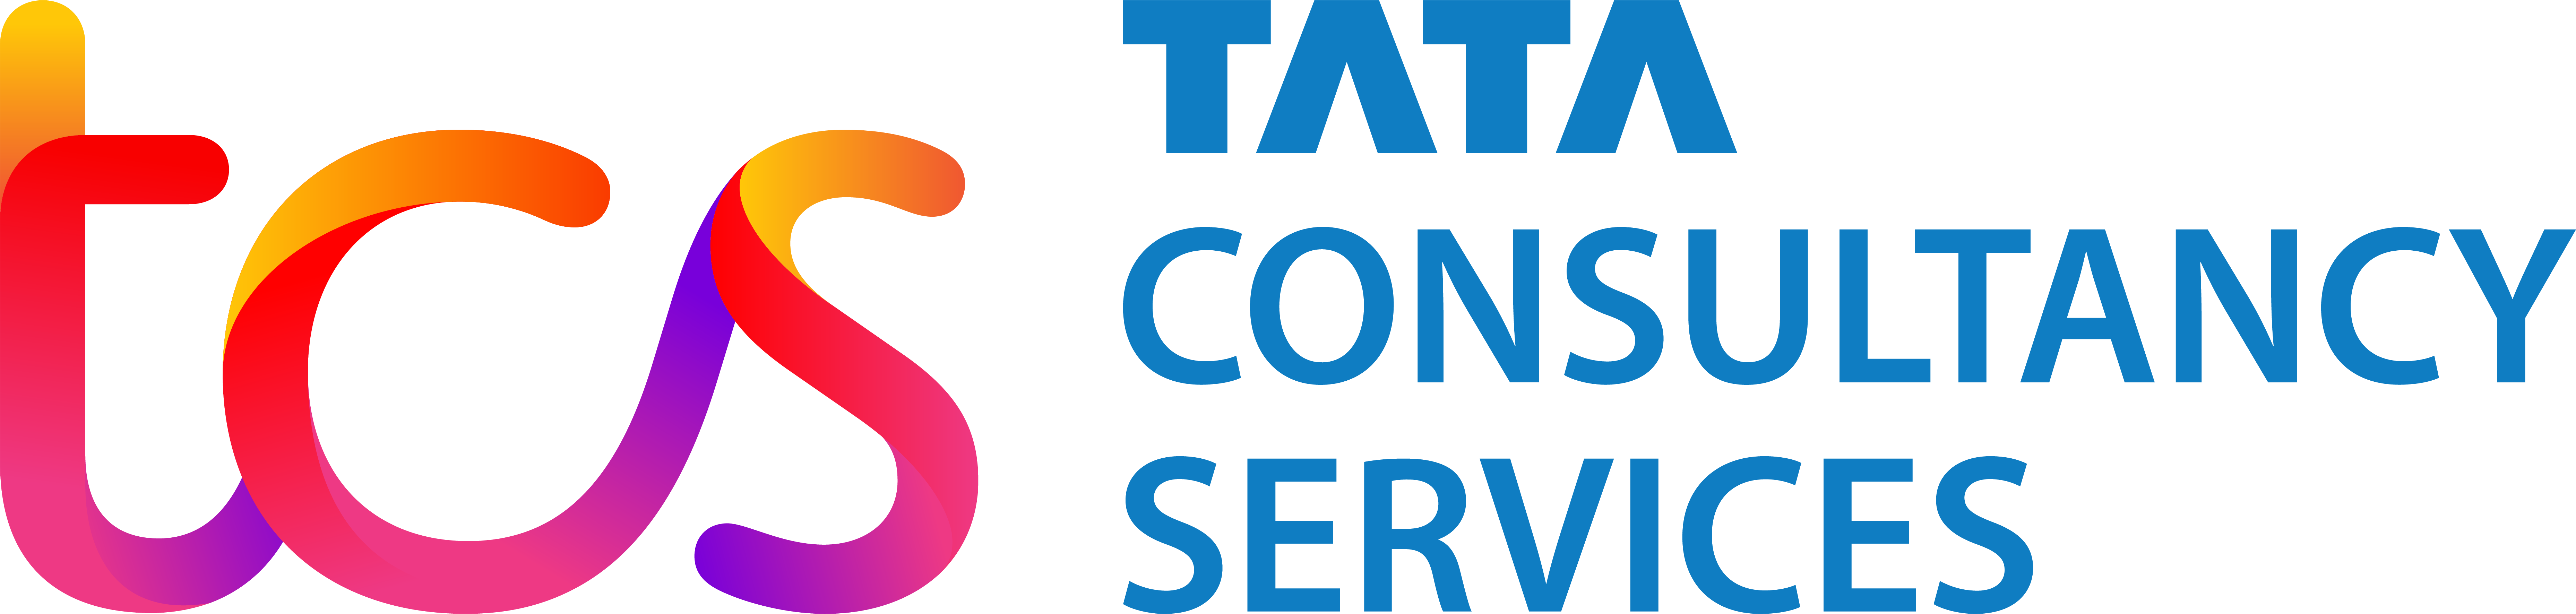 Logotipo da TCS